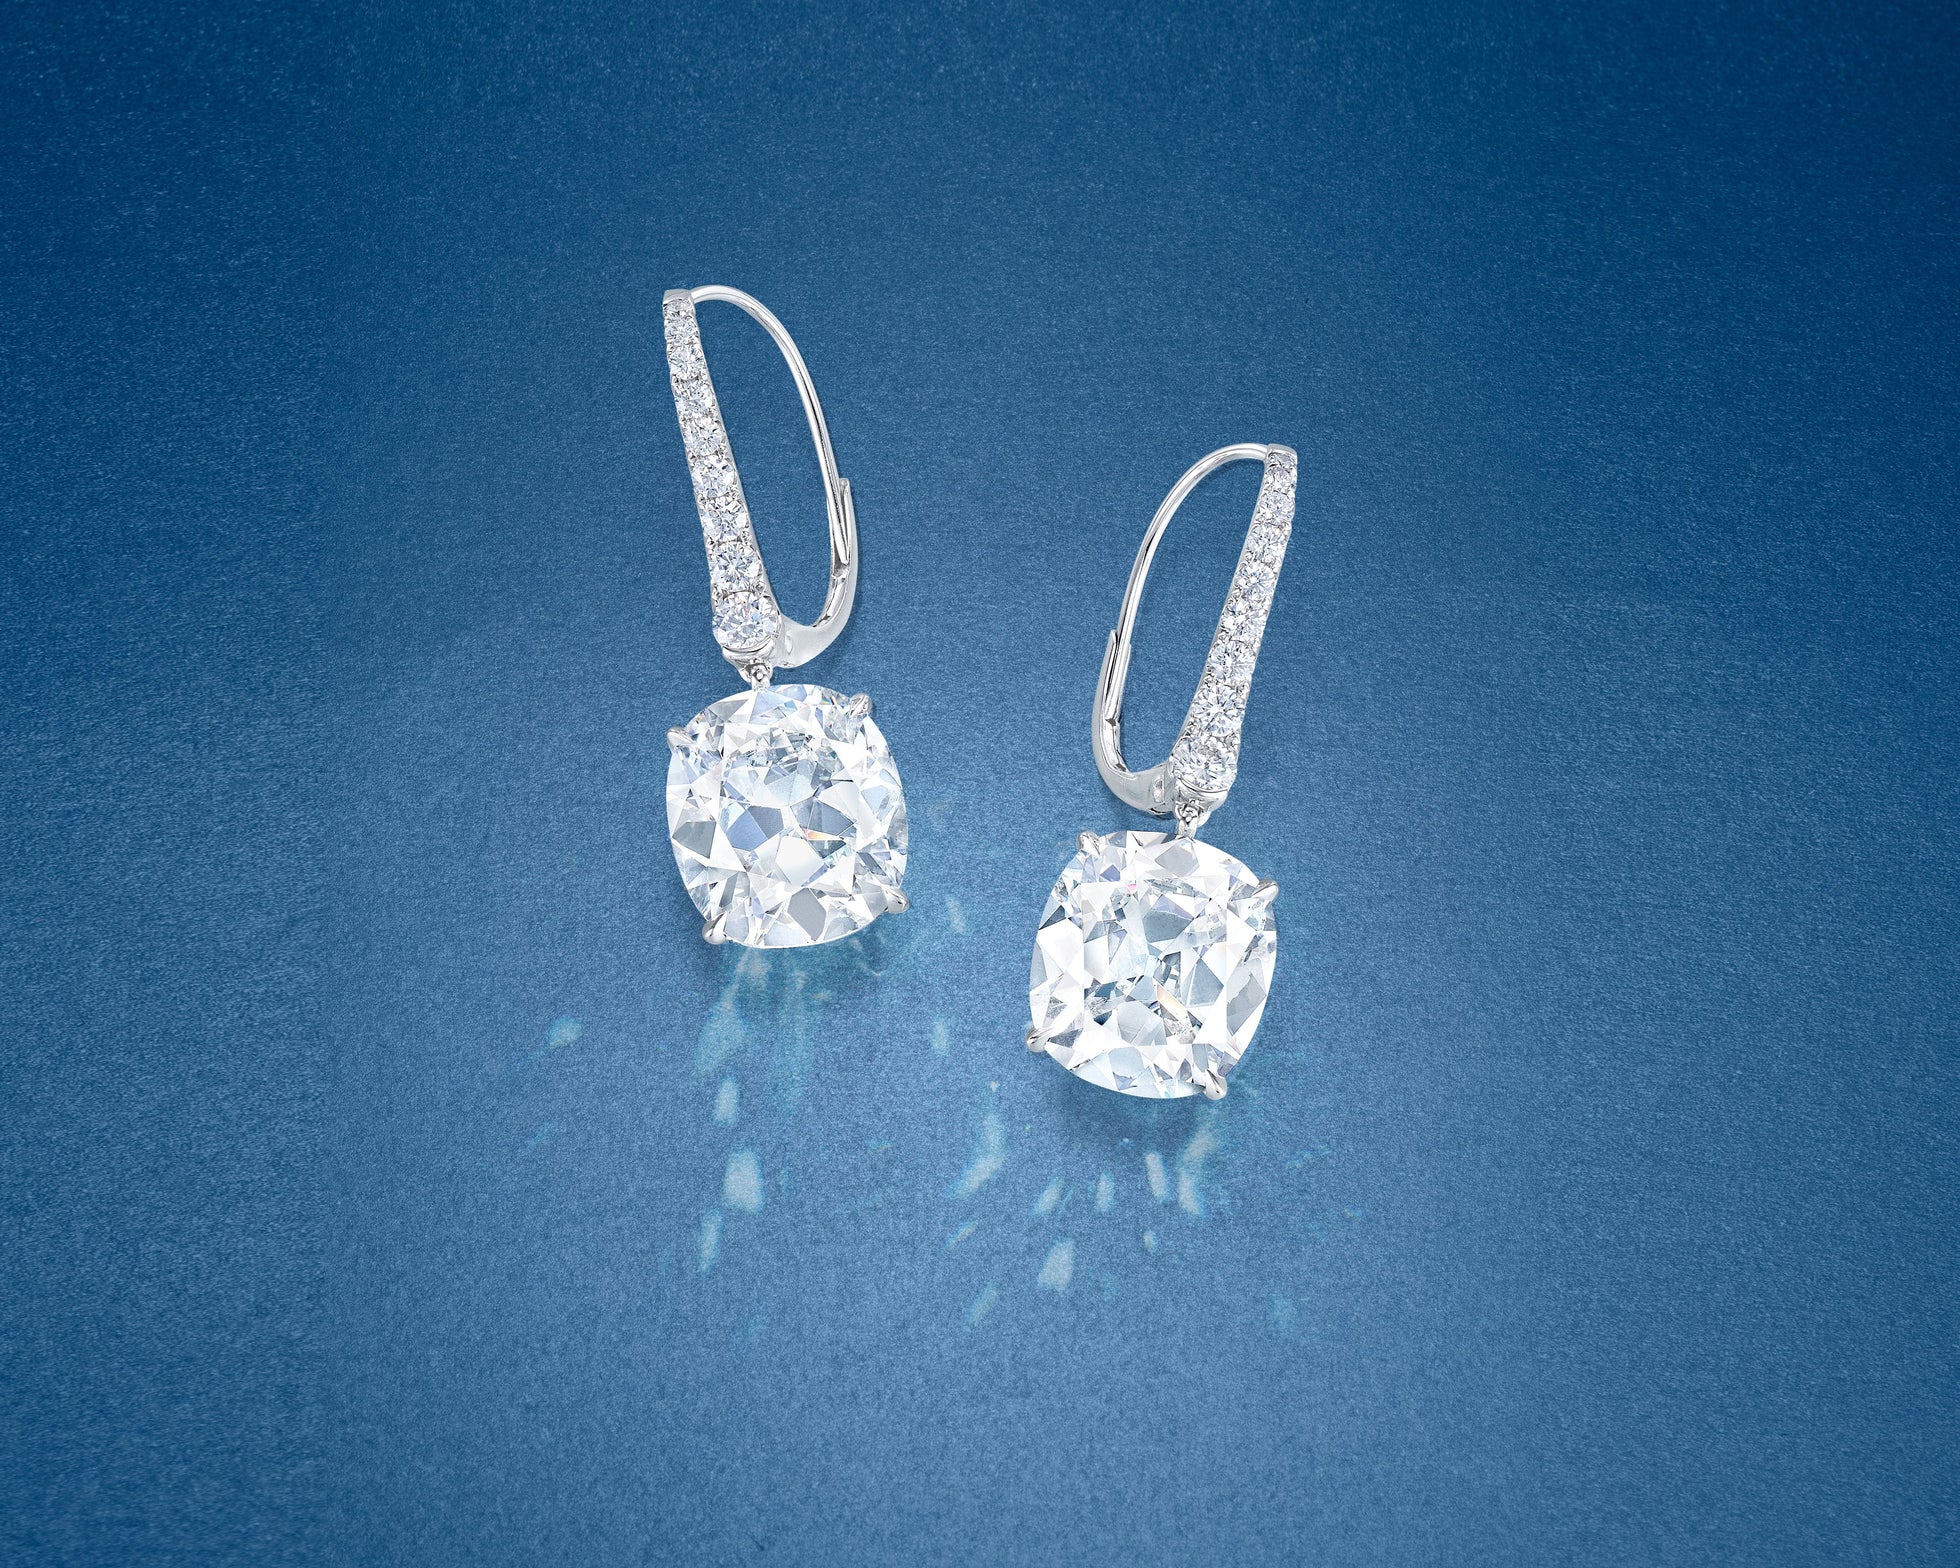 Buy 1 Carat Blue Topaz Earrings Studs-blue Topaz-natural Blue Topaz Stud  Earrings-14 K White Gold Earnings-birthday Present-anniversary Gift Online  in India - Etsy